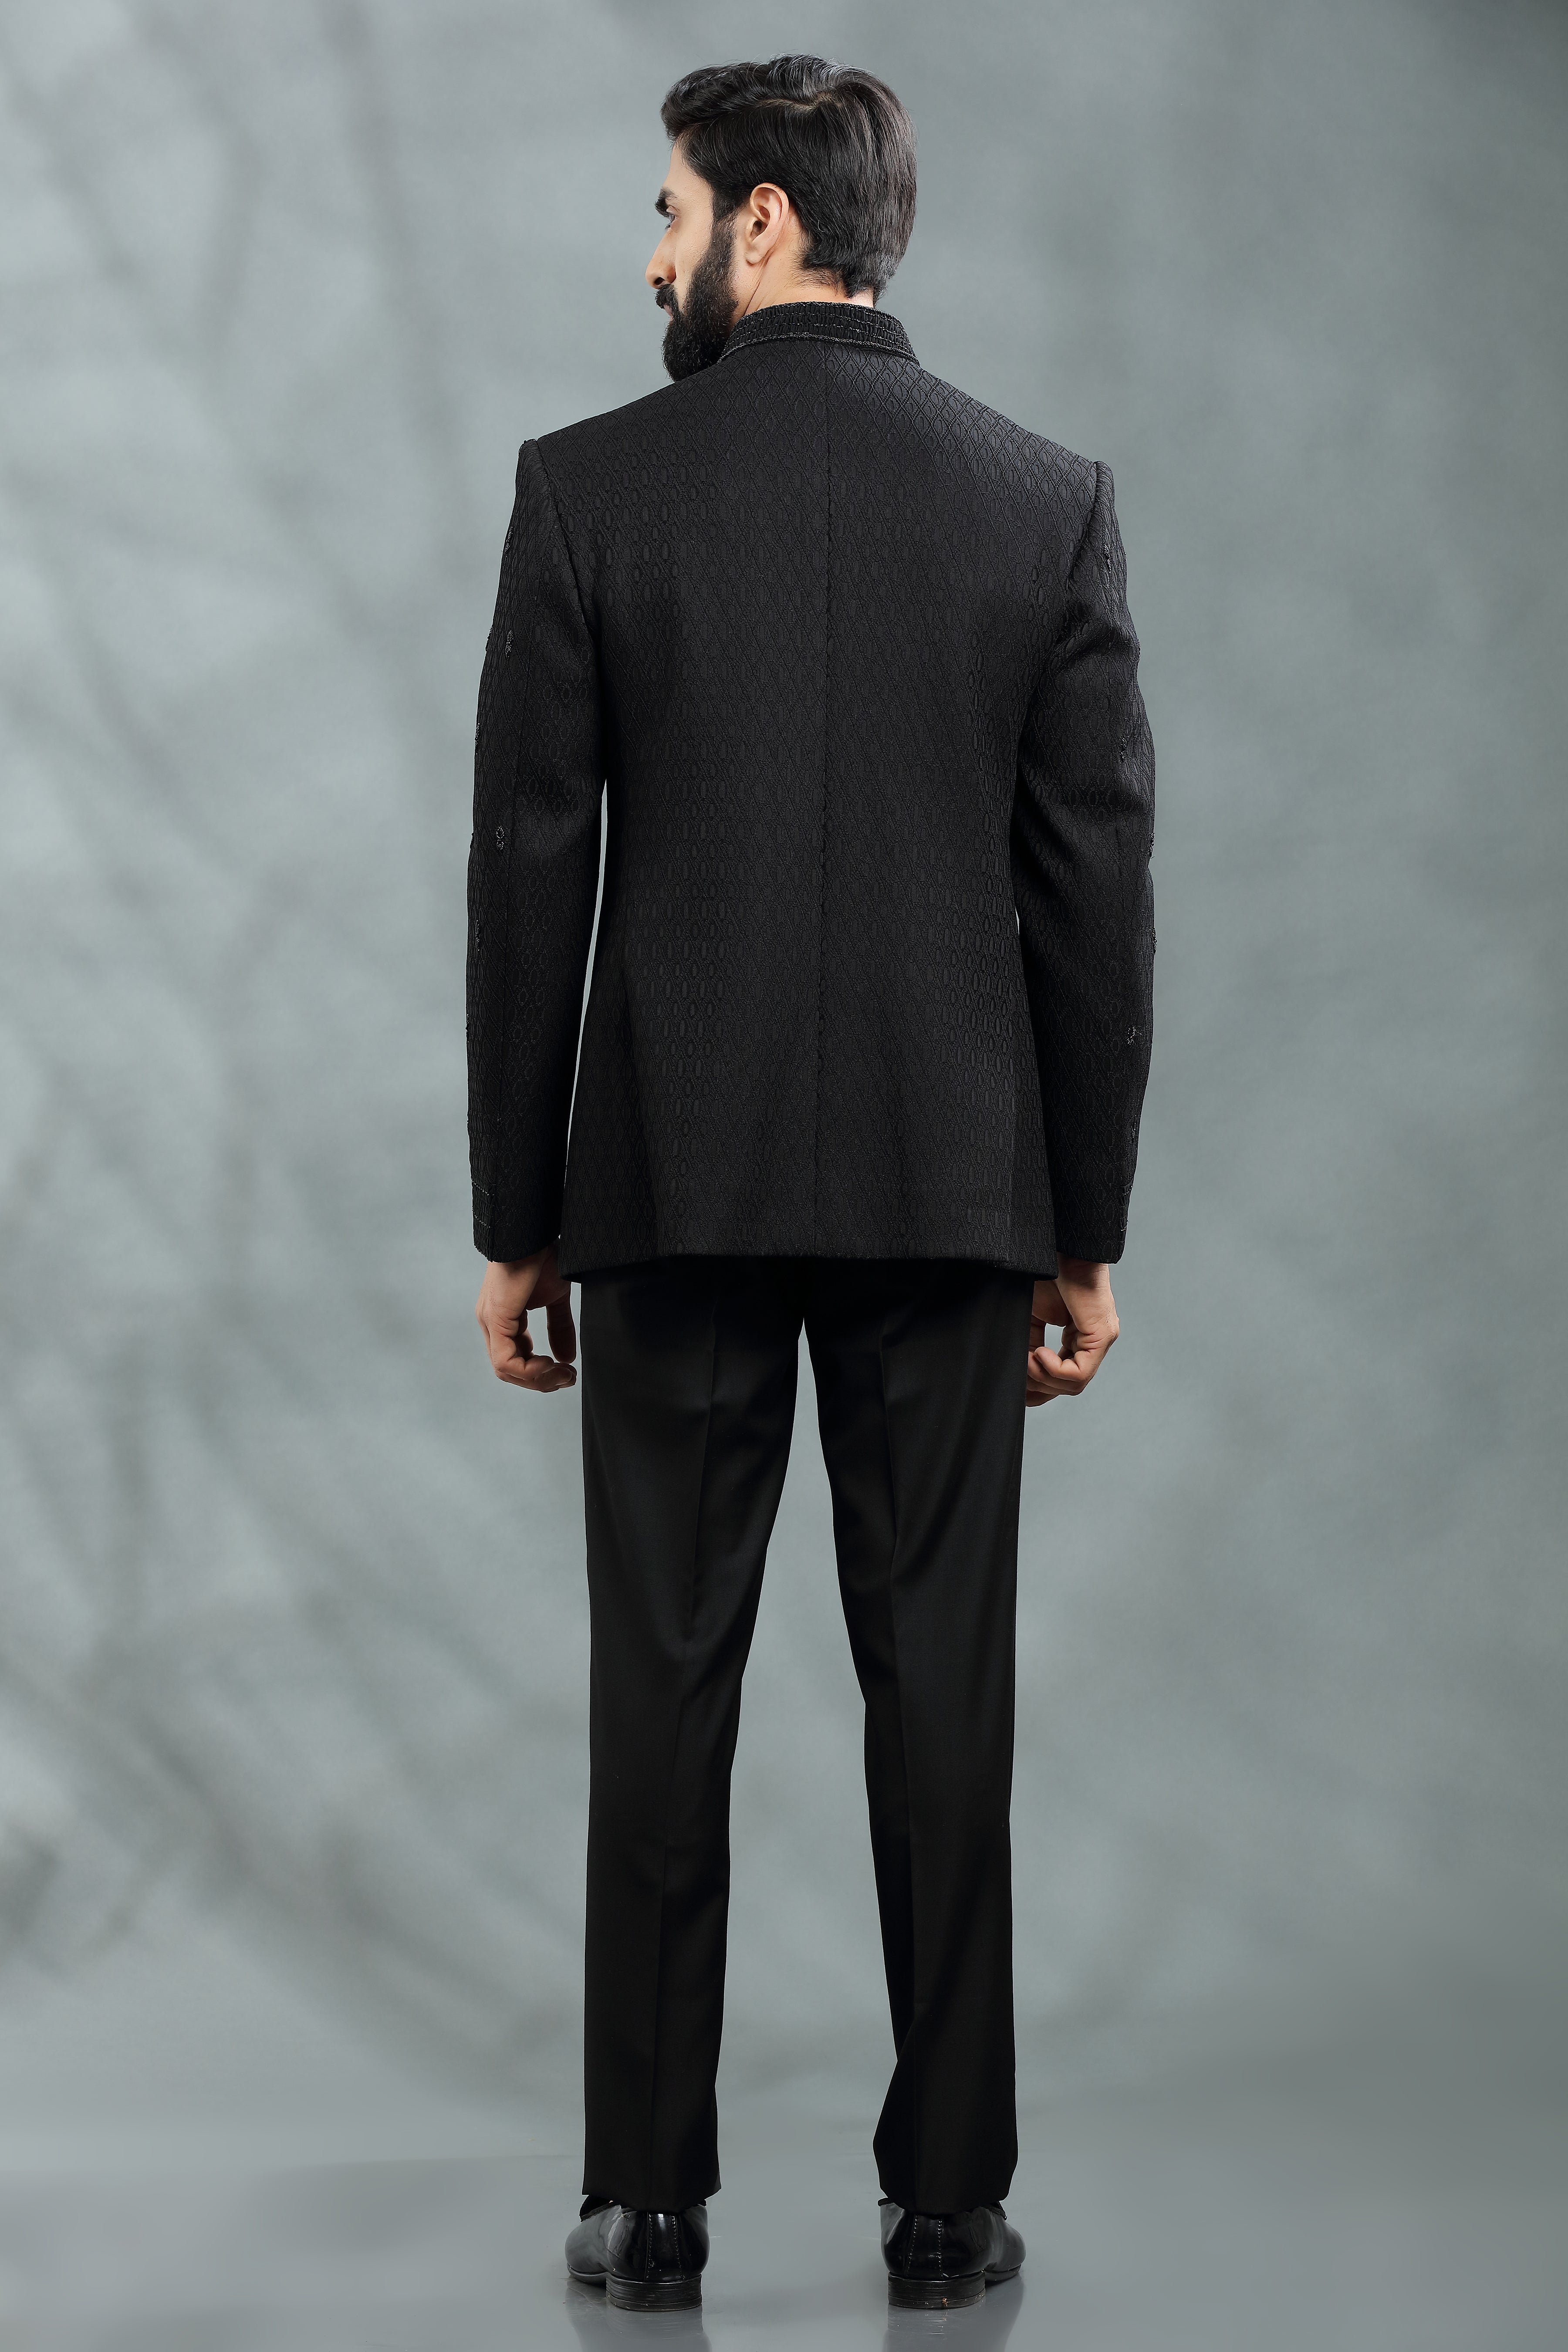 Buy Black Jodhpuri Suits for Boys – Mumkins